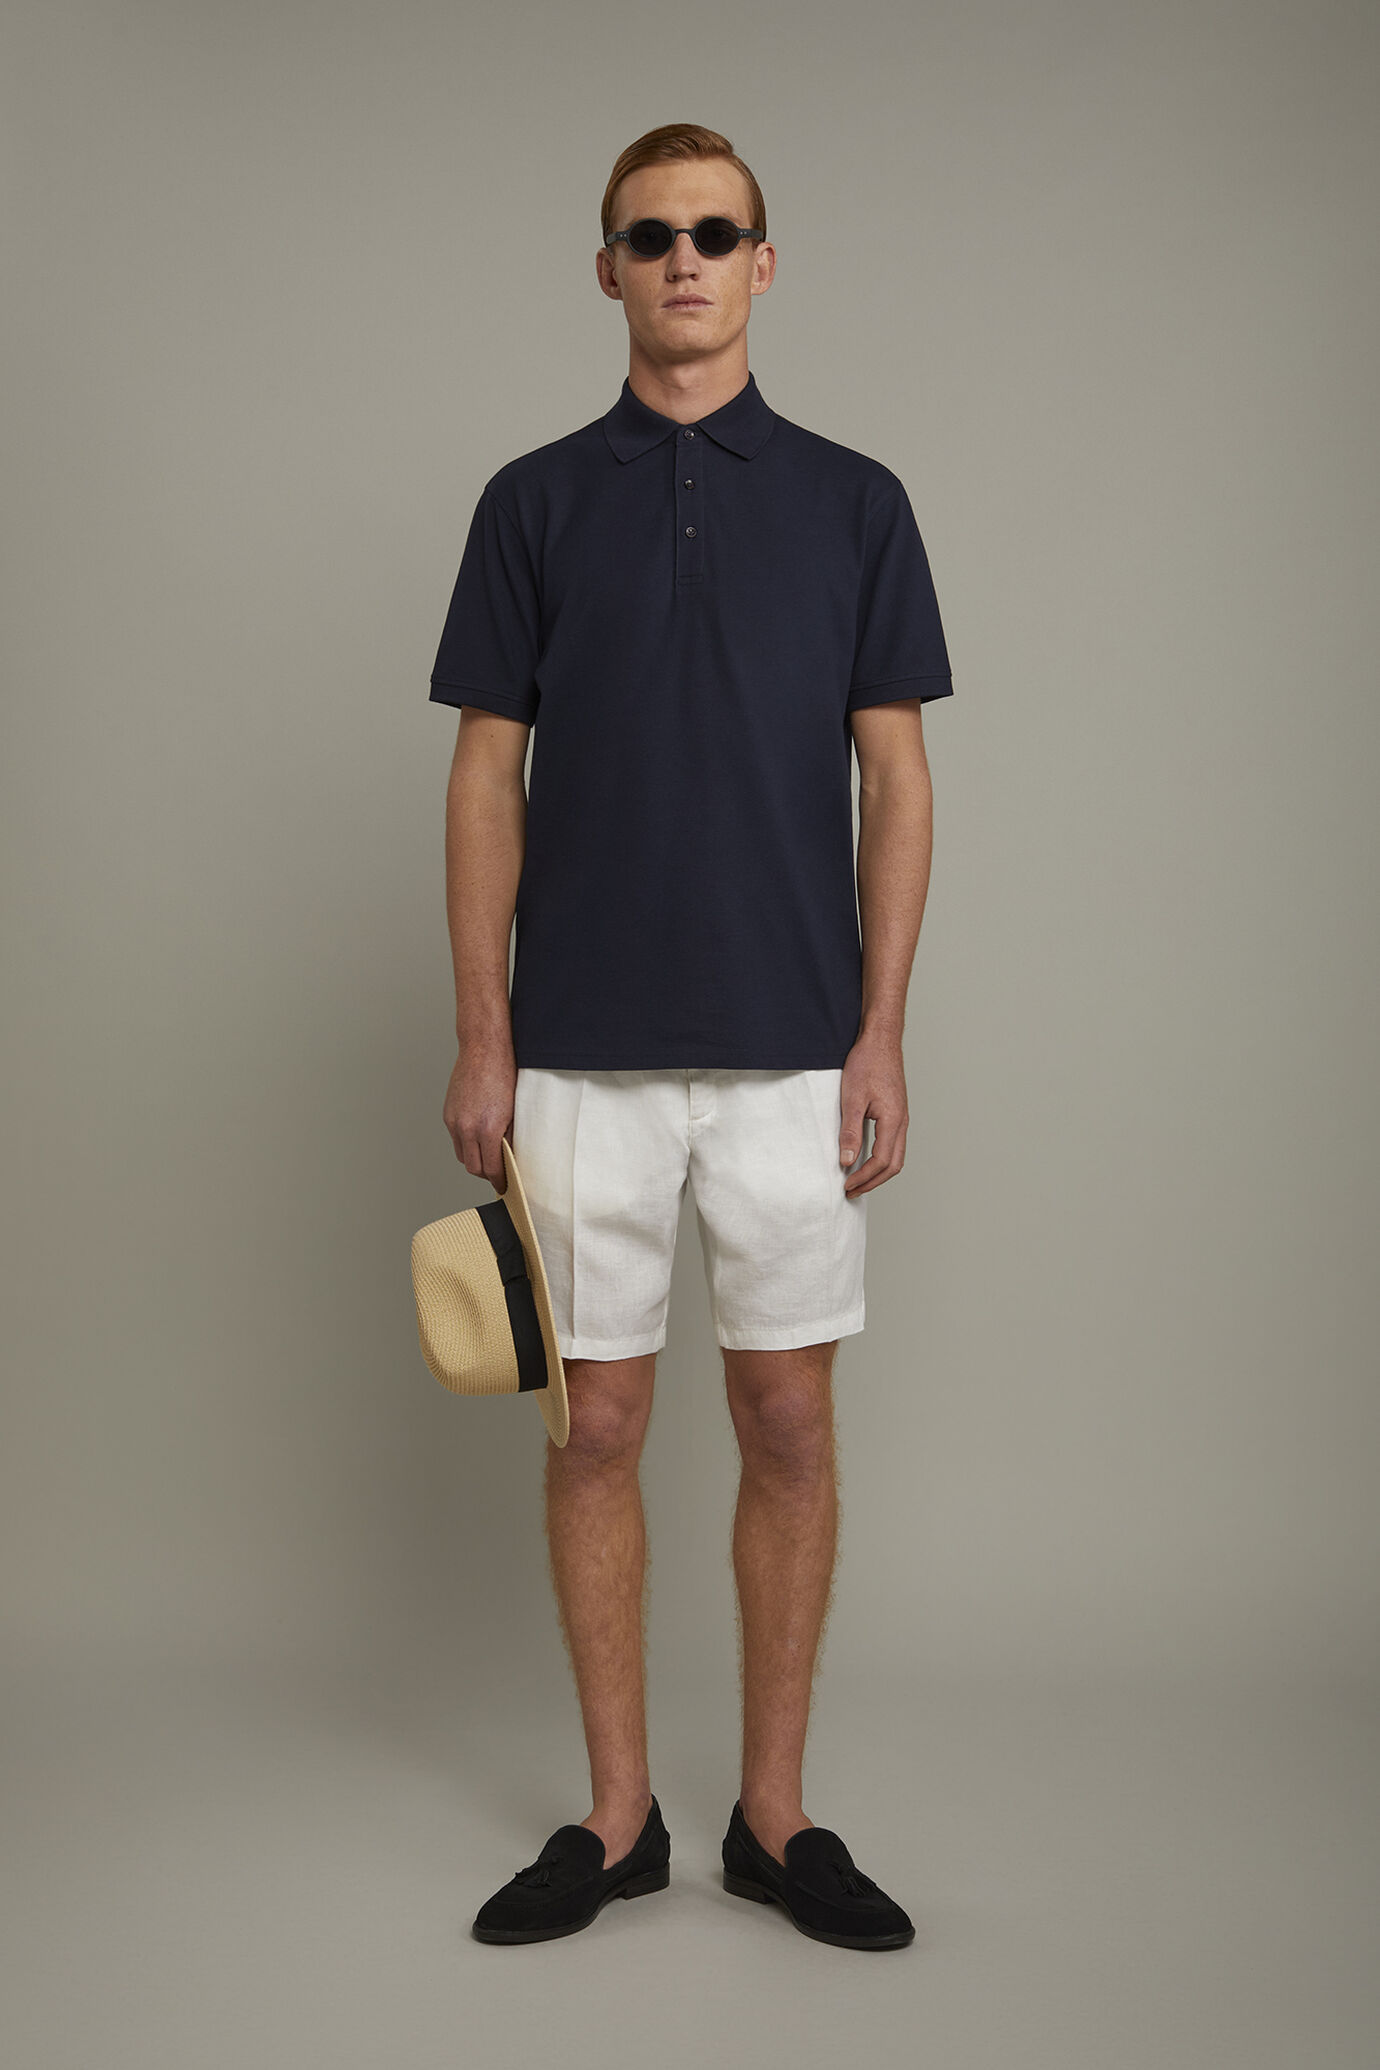 Kurzärmeliges Herren-Poloshirt aus 100 % Baumwolle in normaler Passform